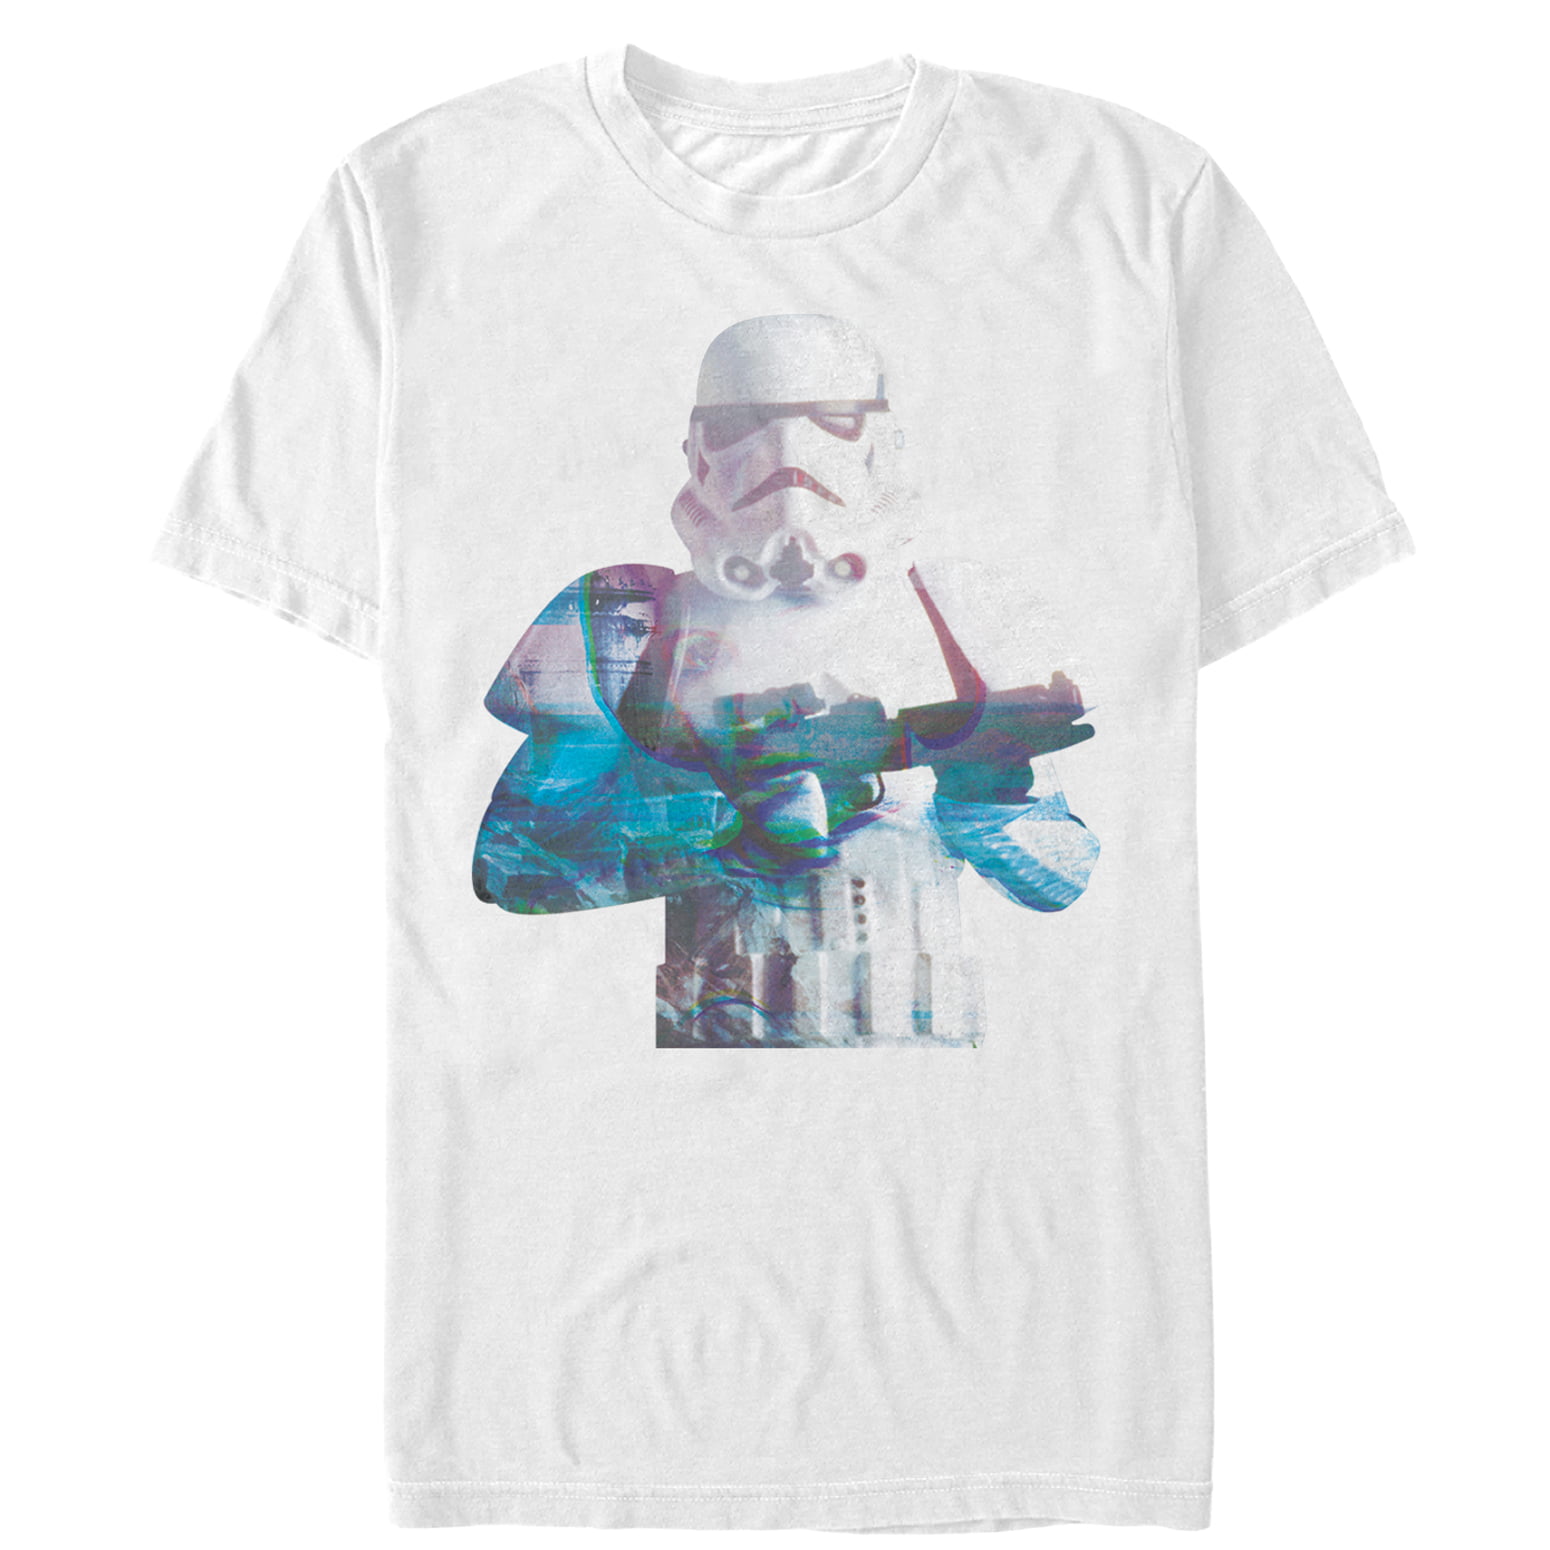 Star Wars Movie Stormtrooper Graphics Adult Men's Navy Blue Tee shirt New 